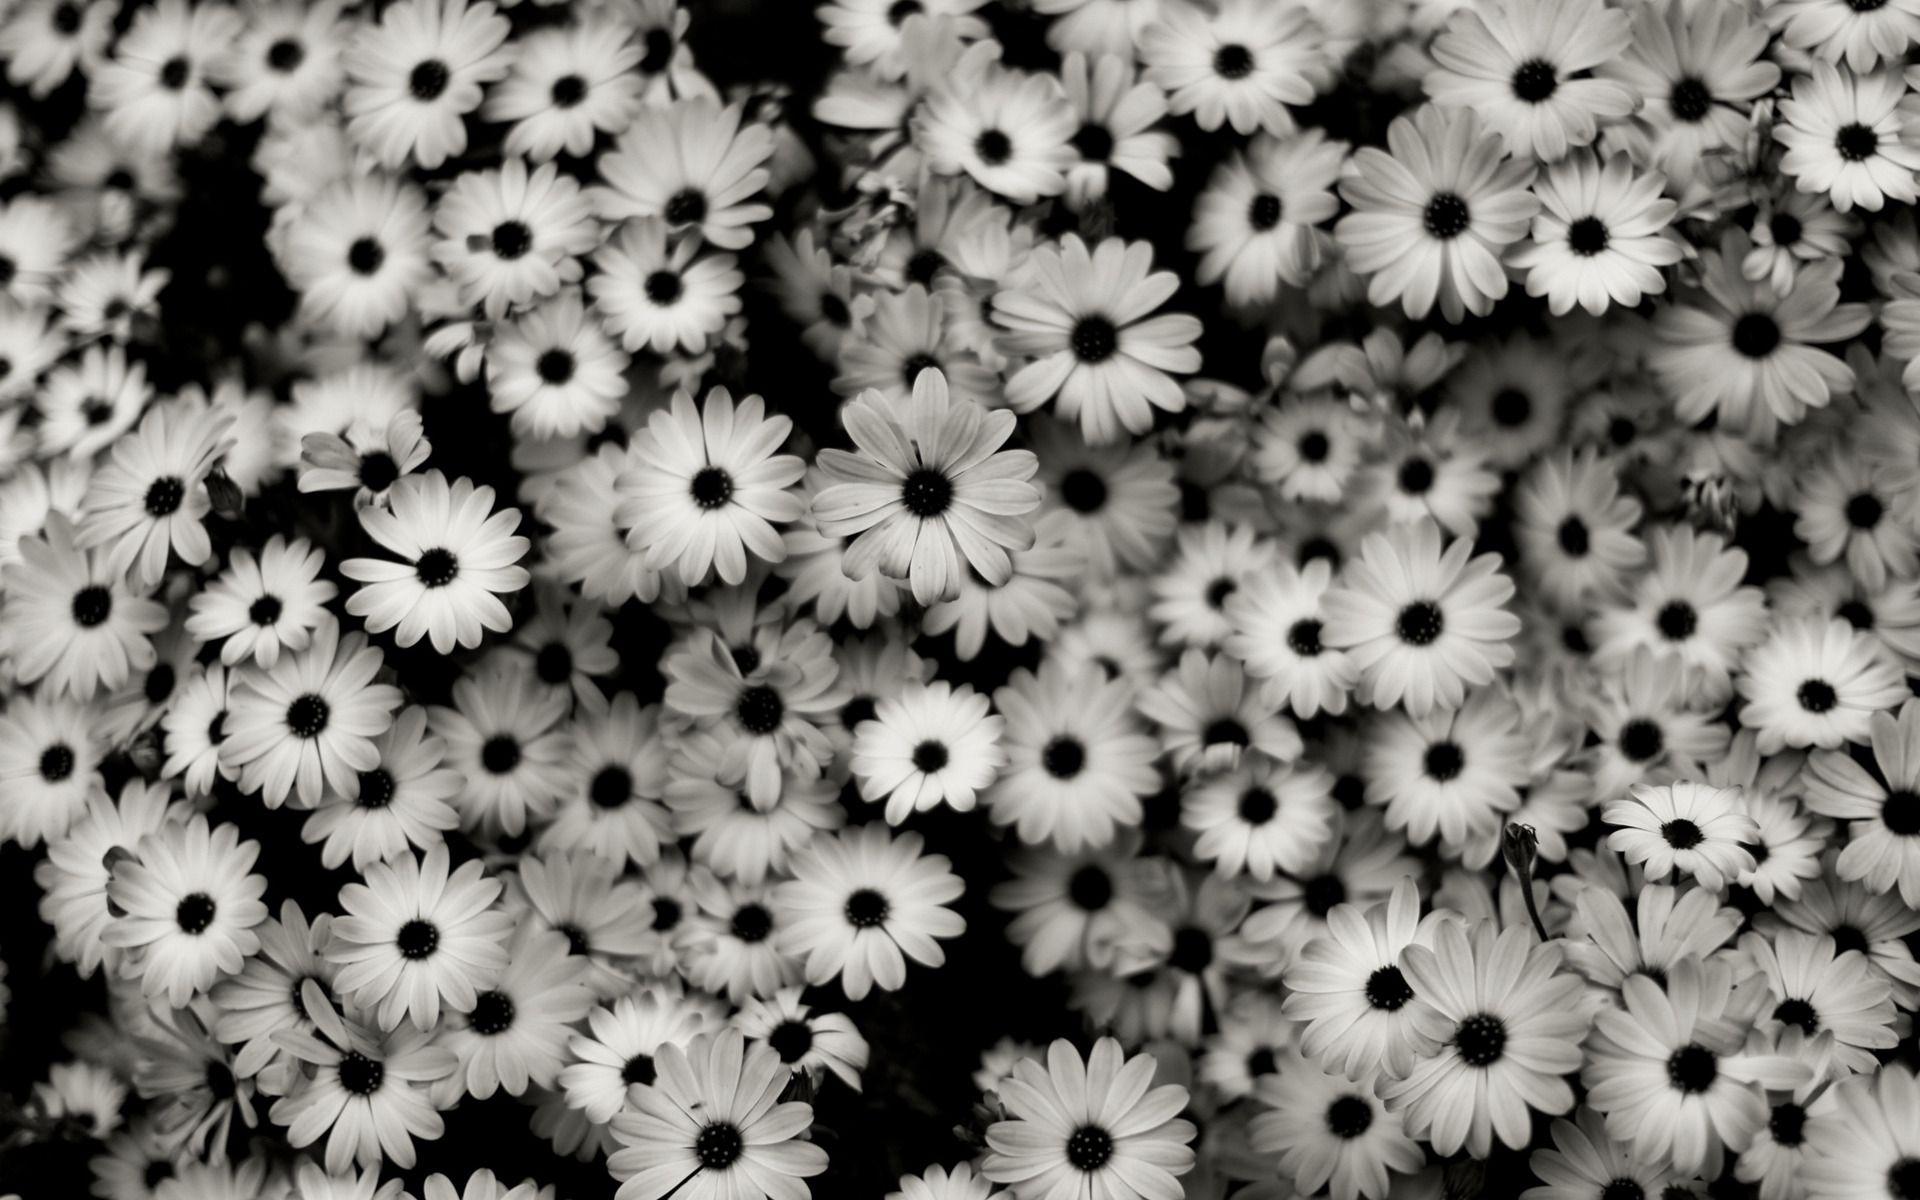 dongetrabi: Black And White Vintage Tumblr Background Image